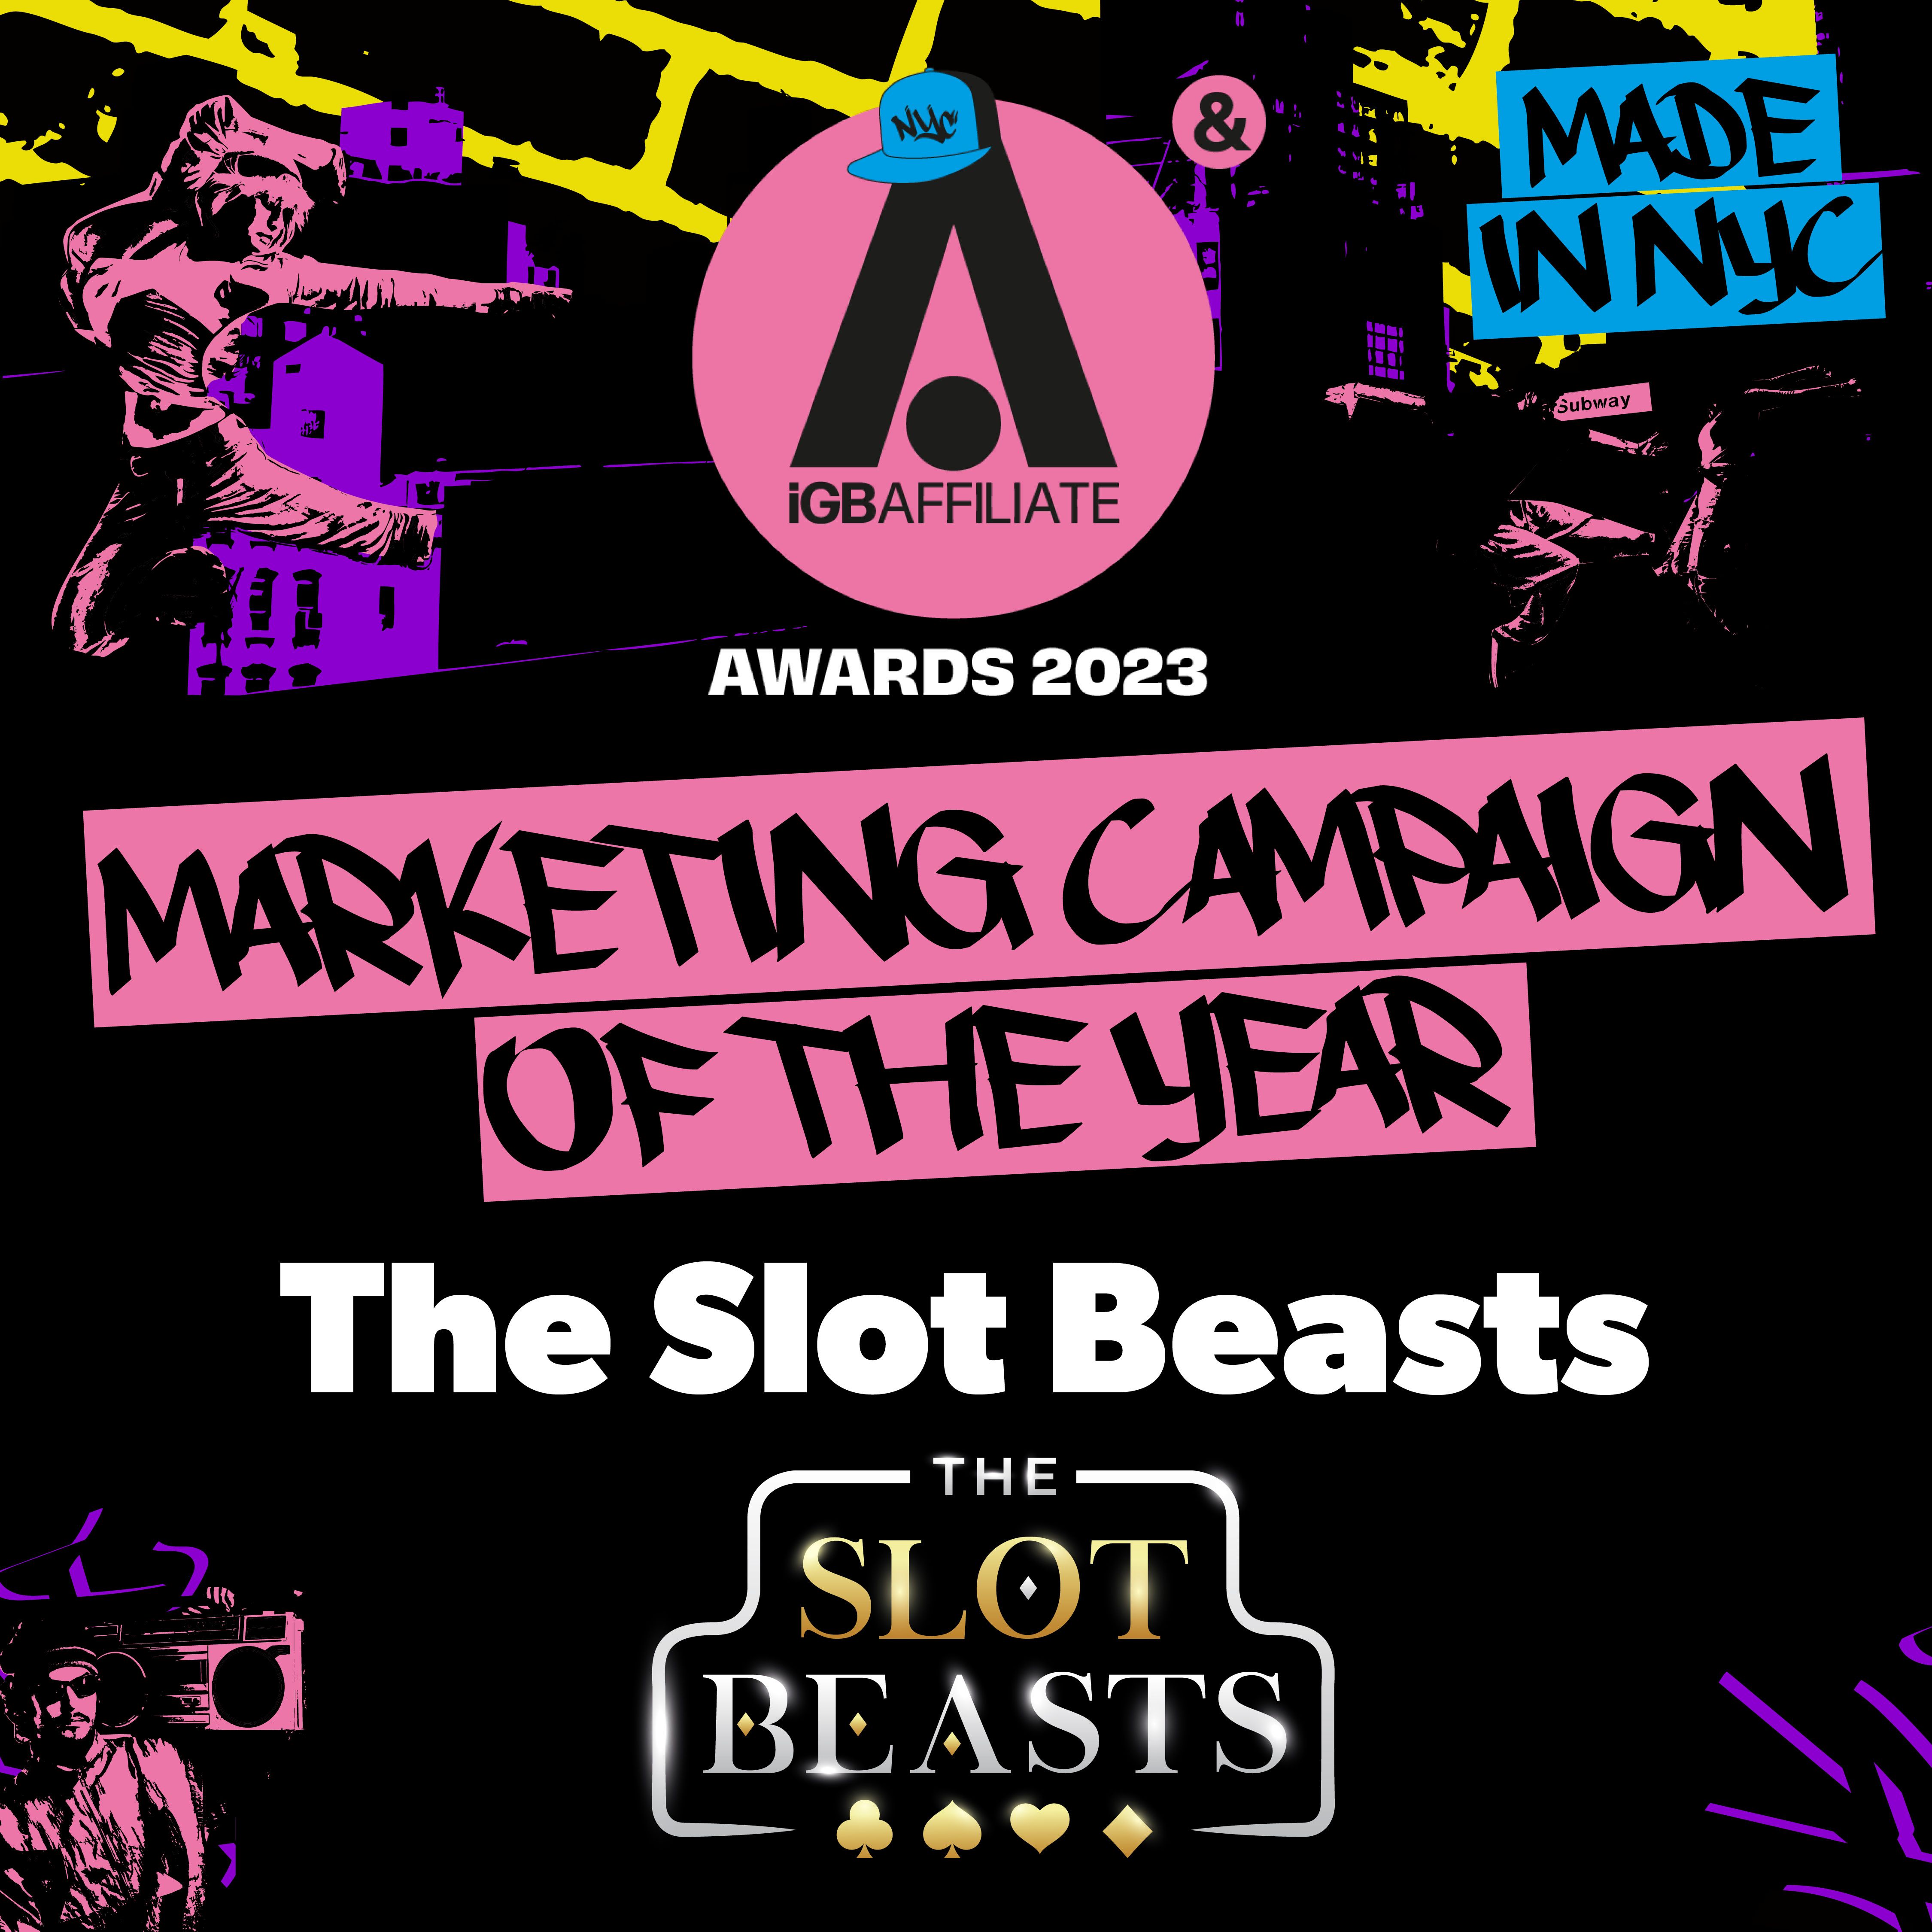 The Slots Beasts winners